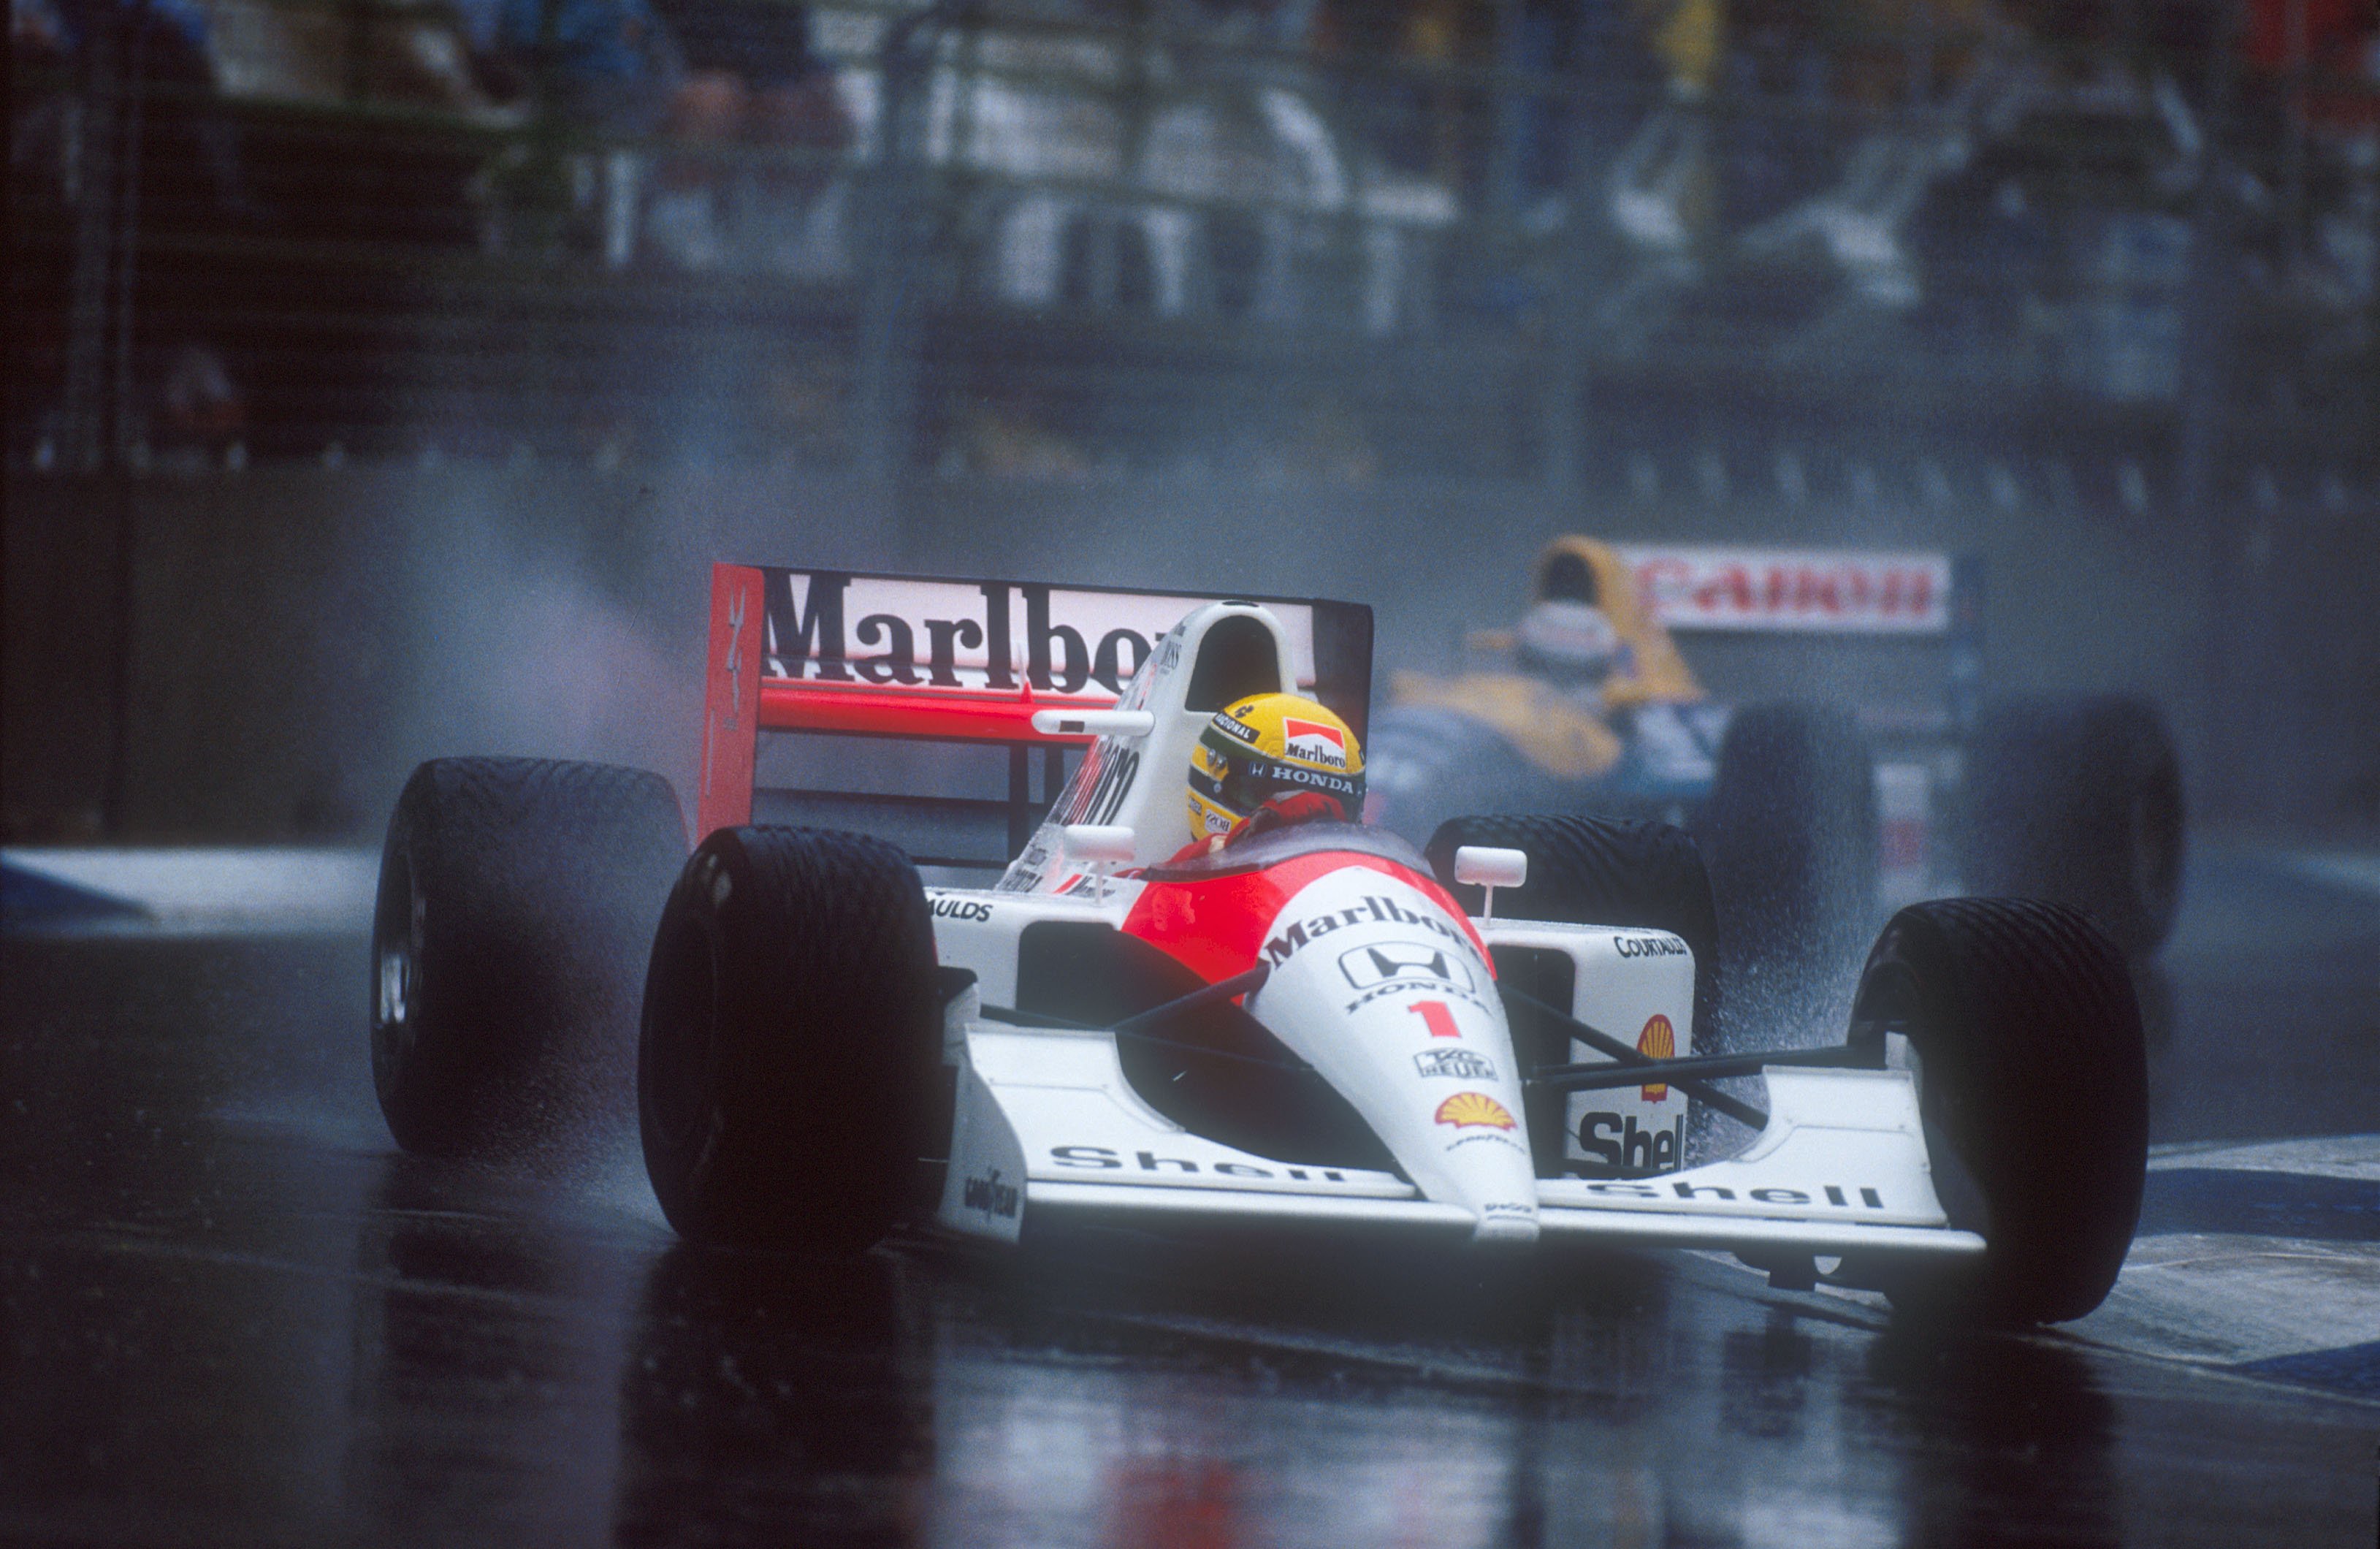 General 3258x2120 Formula 1 McLaren McLaren MP4 Marlboro Ayrton Senna helmet rain racing deceased livery Brazilian Racing driver